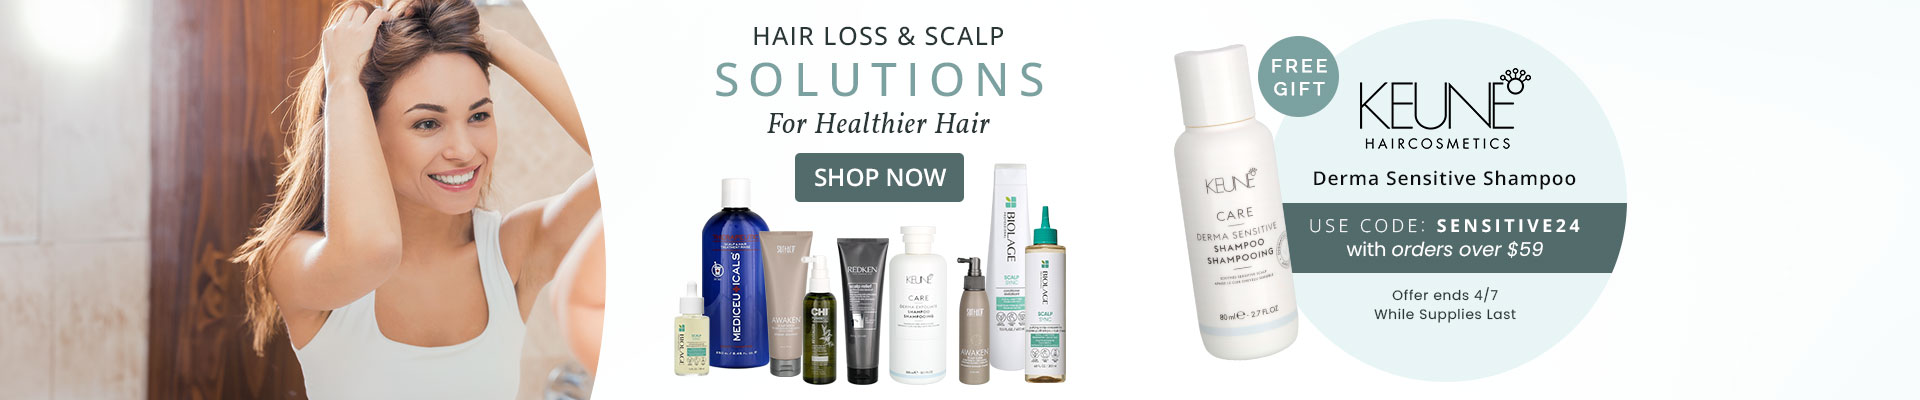 Hair Loss & Scalp Solutions for Healthier Hair + A Free Keune Derma Sensitive Shampoo with orders over $59 (use code: senstive24)